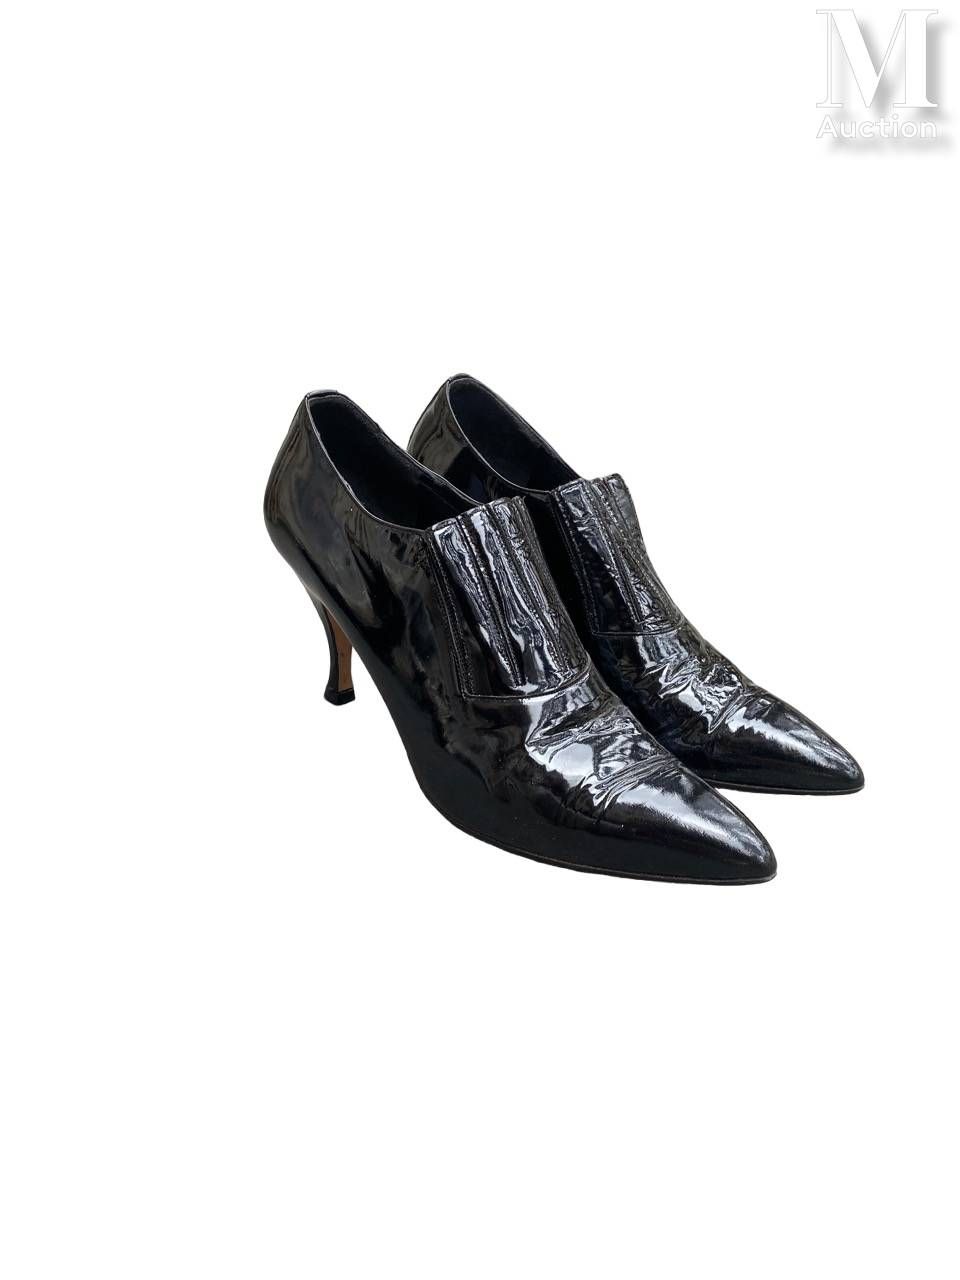 CHANTAL THOMASS - Automne-hiver 1986 一双鞋
黑色漆皮，鞋面有弹性
P.40
出处：拍卖会 "尚塔尔-托马斯夫人 - 40年&hellip;